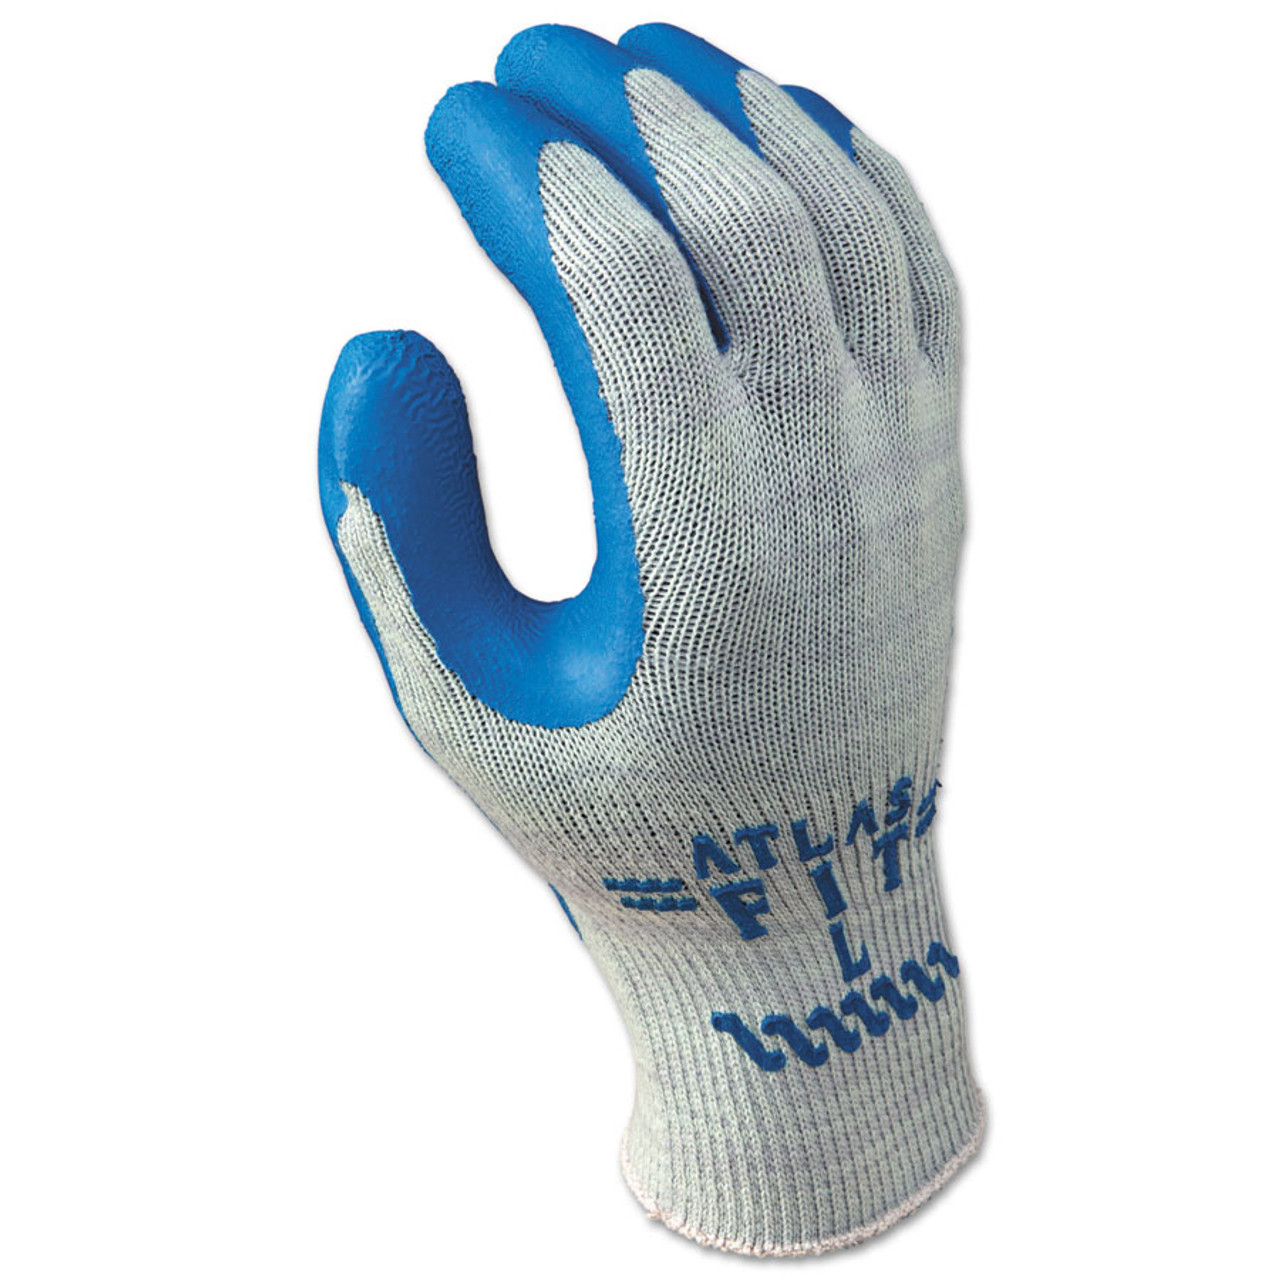 atlas safety gloves